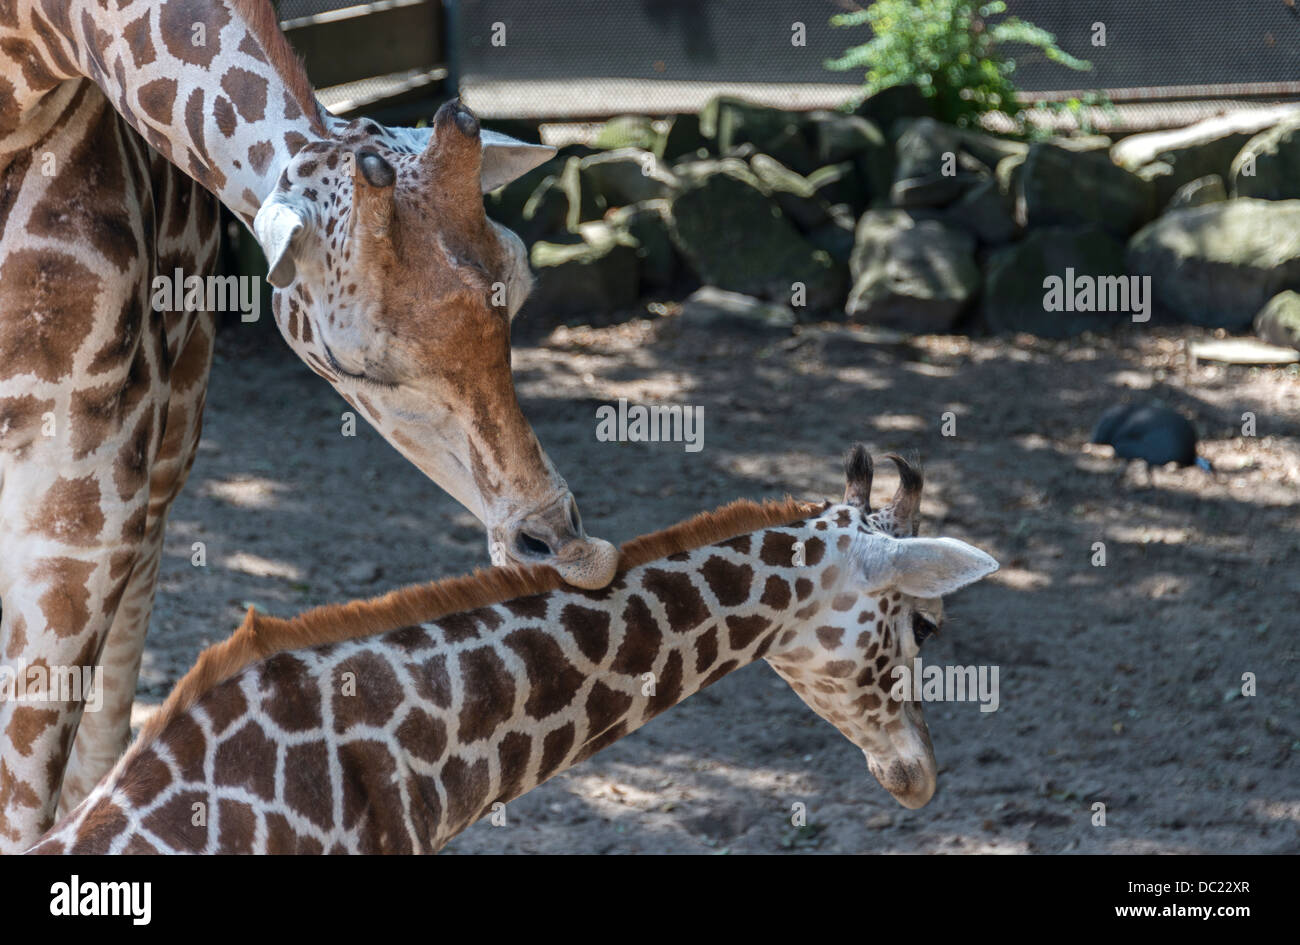 mother giraffe taken care of young baby giraffe Stock Photo